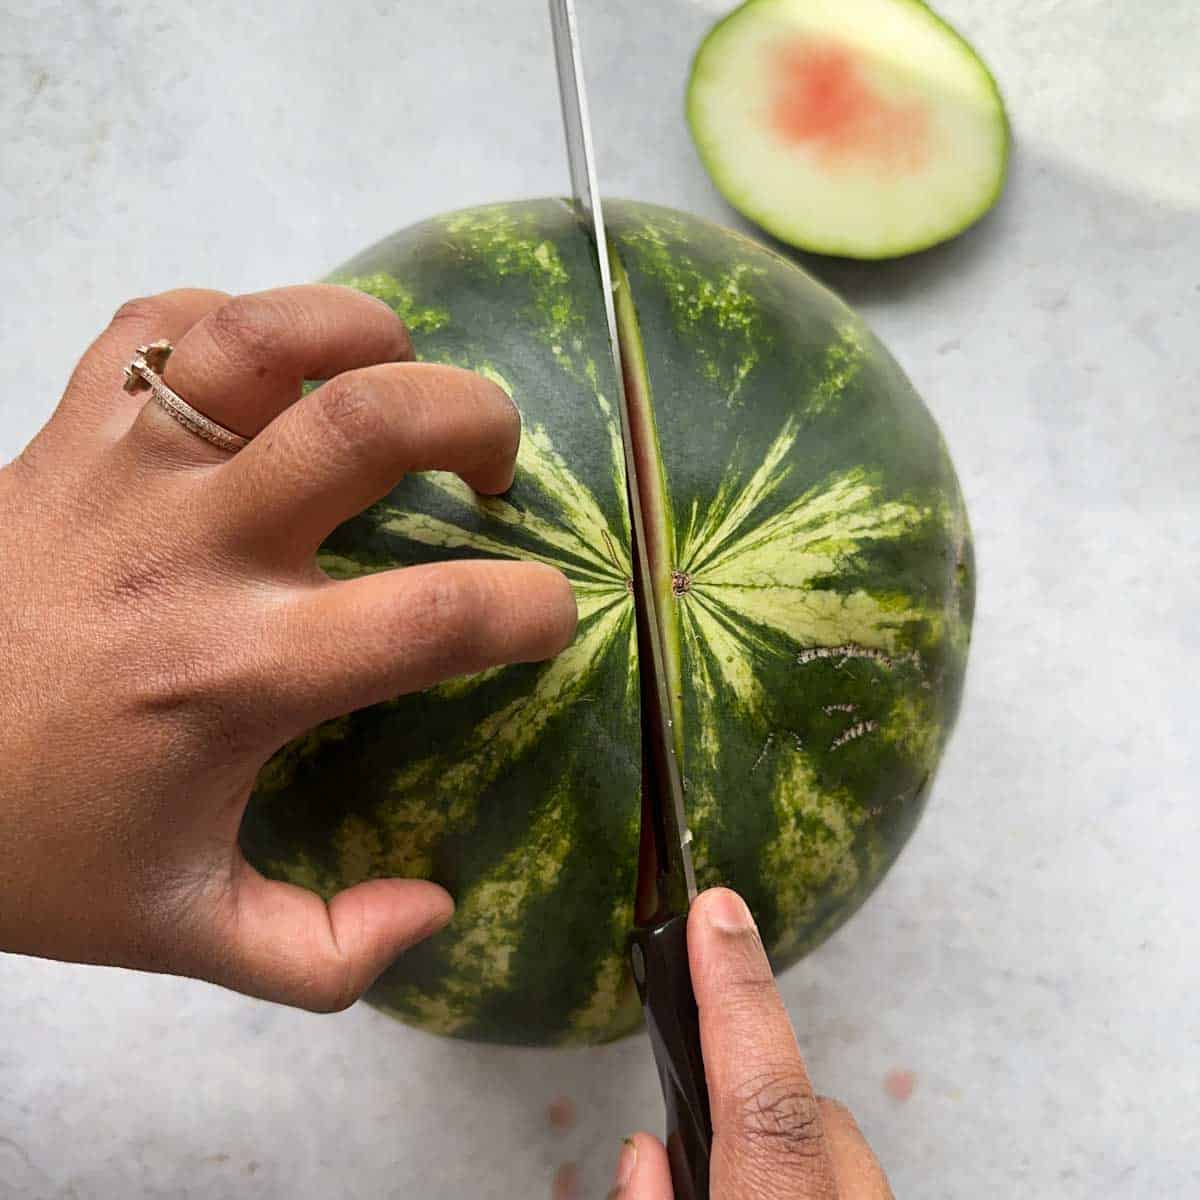 Cutting the watermelon in half